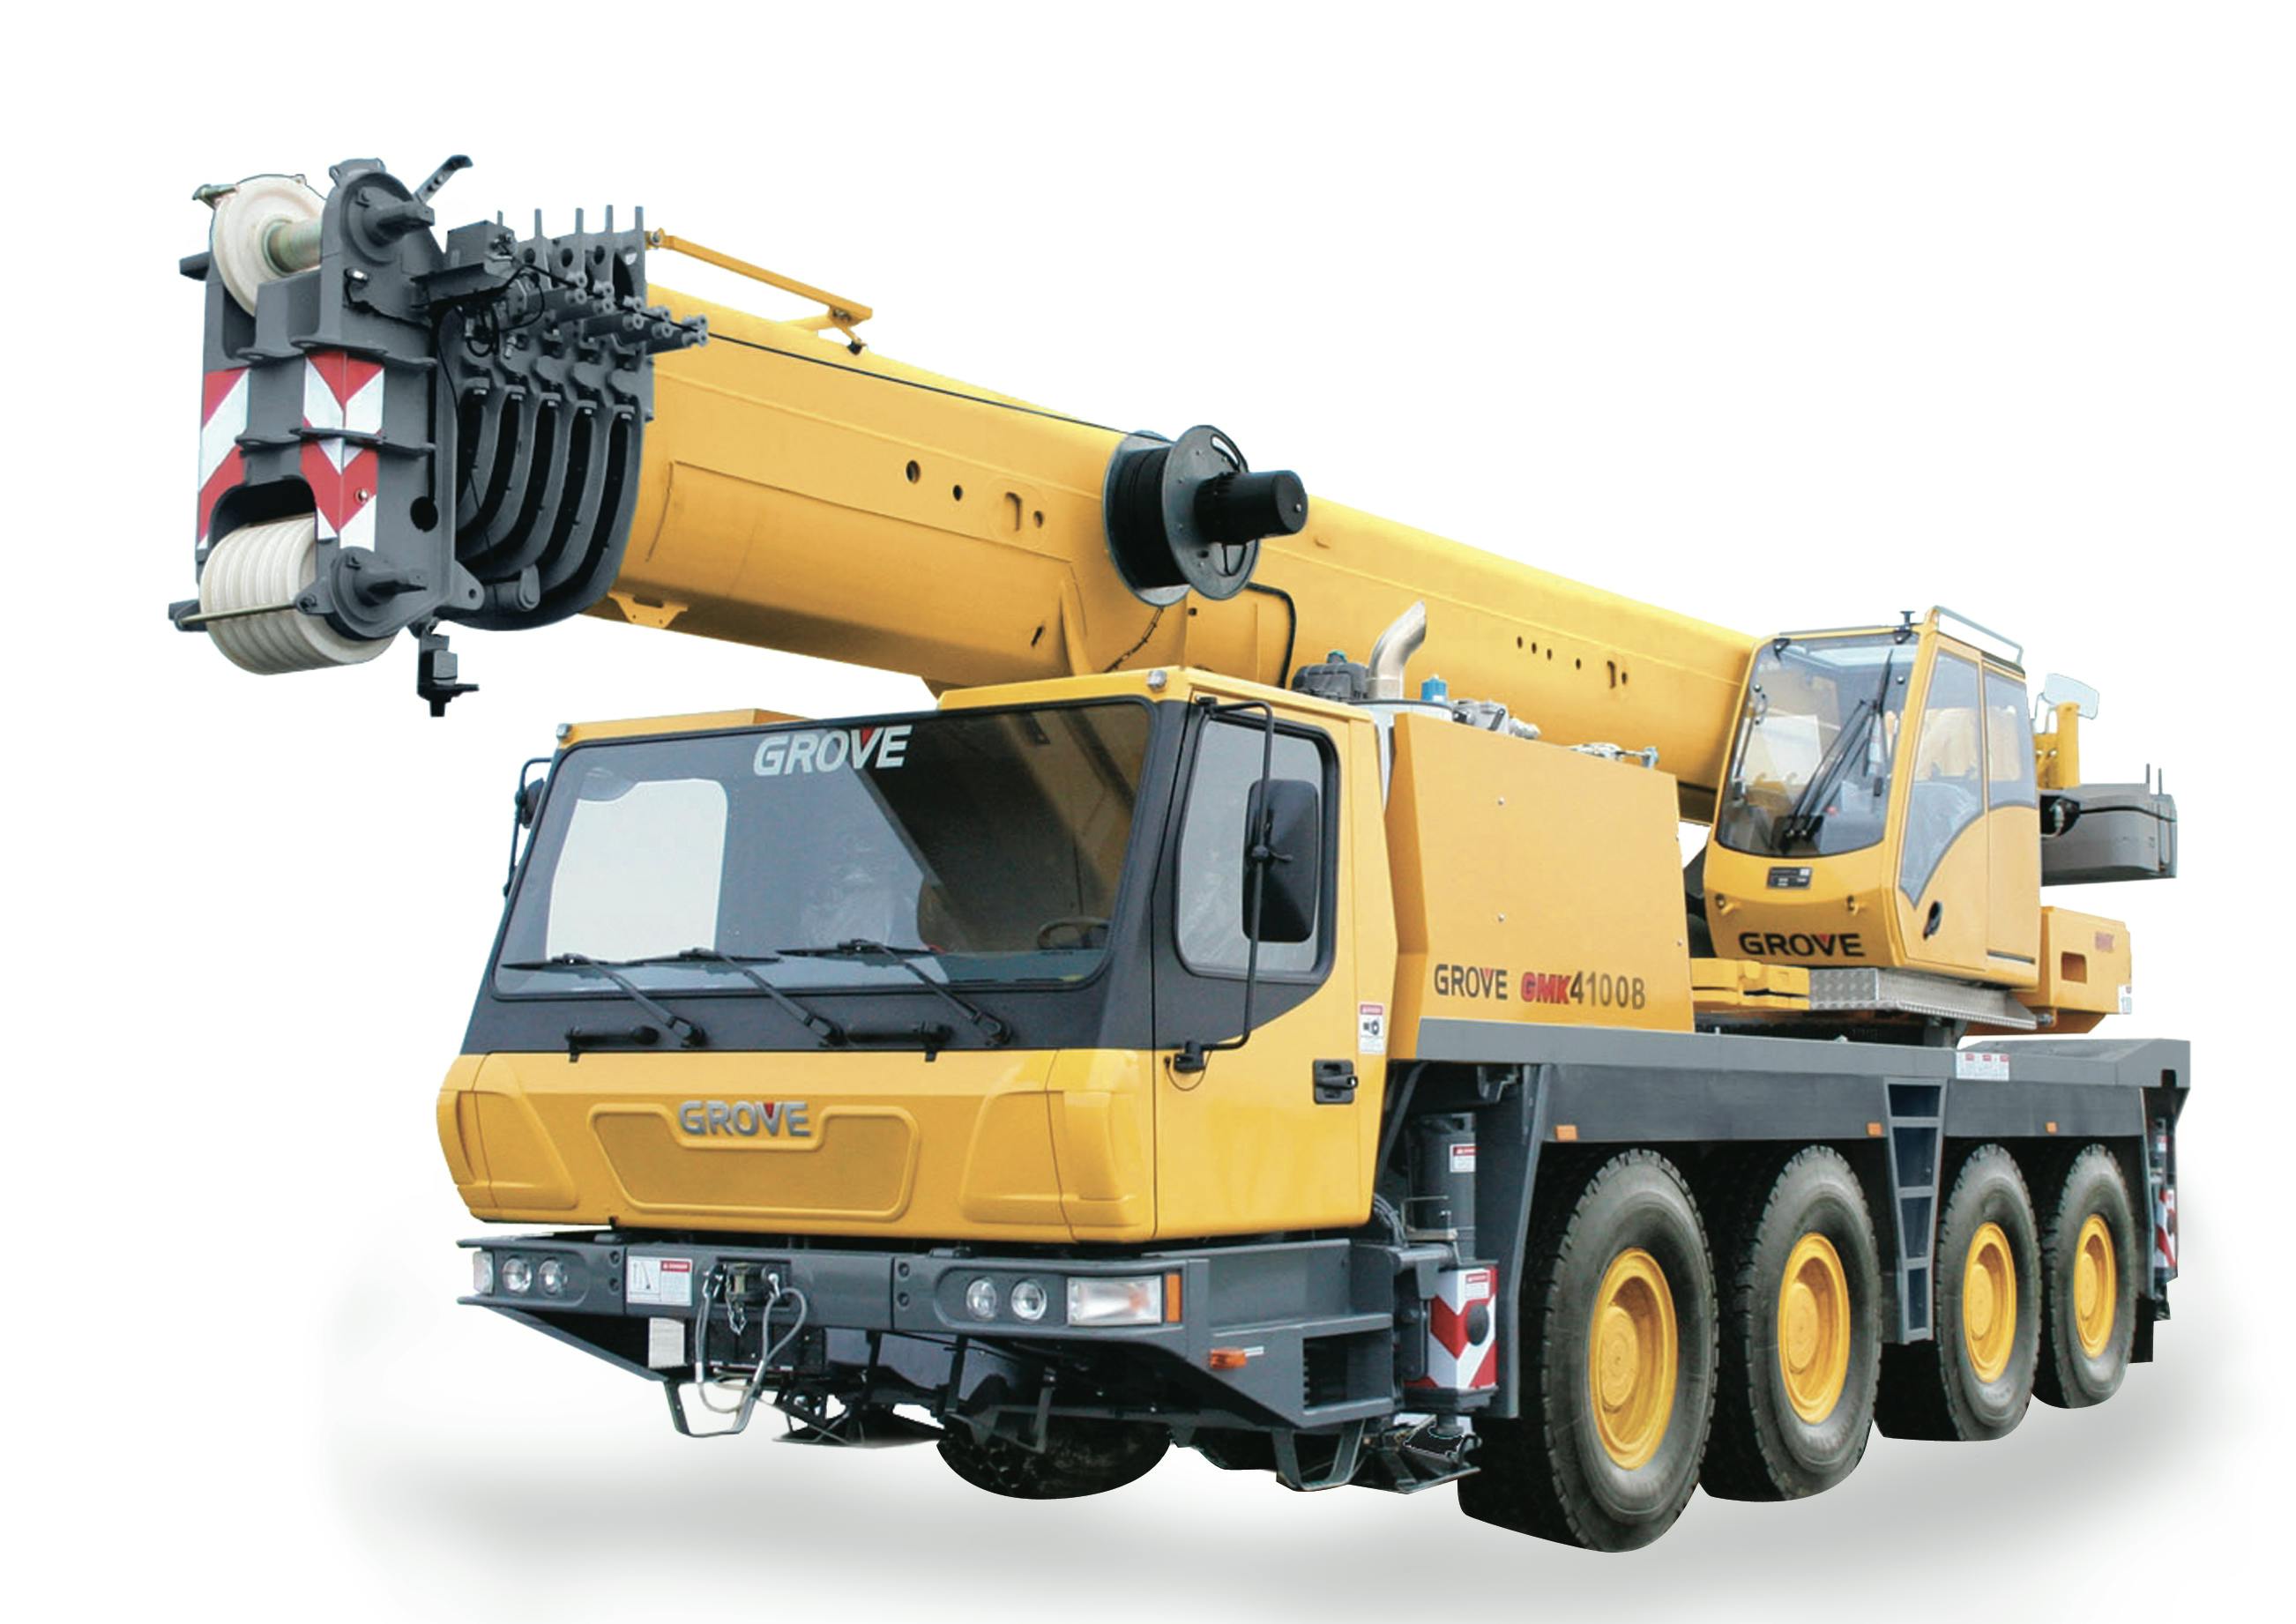 Manitowoc Wins Bid to Supply Cranes to U.S. Army | Construction News